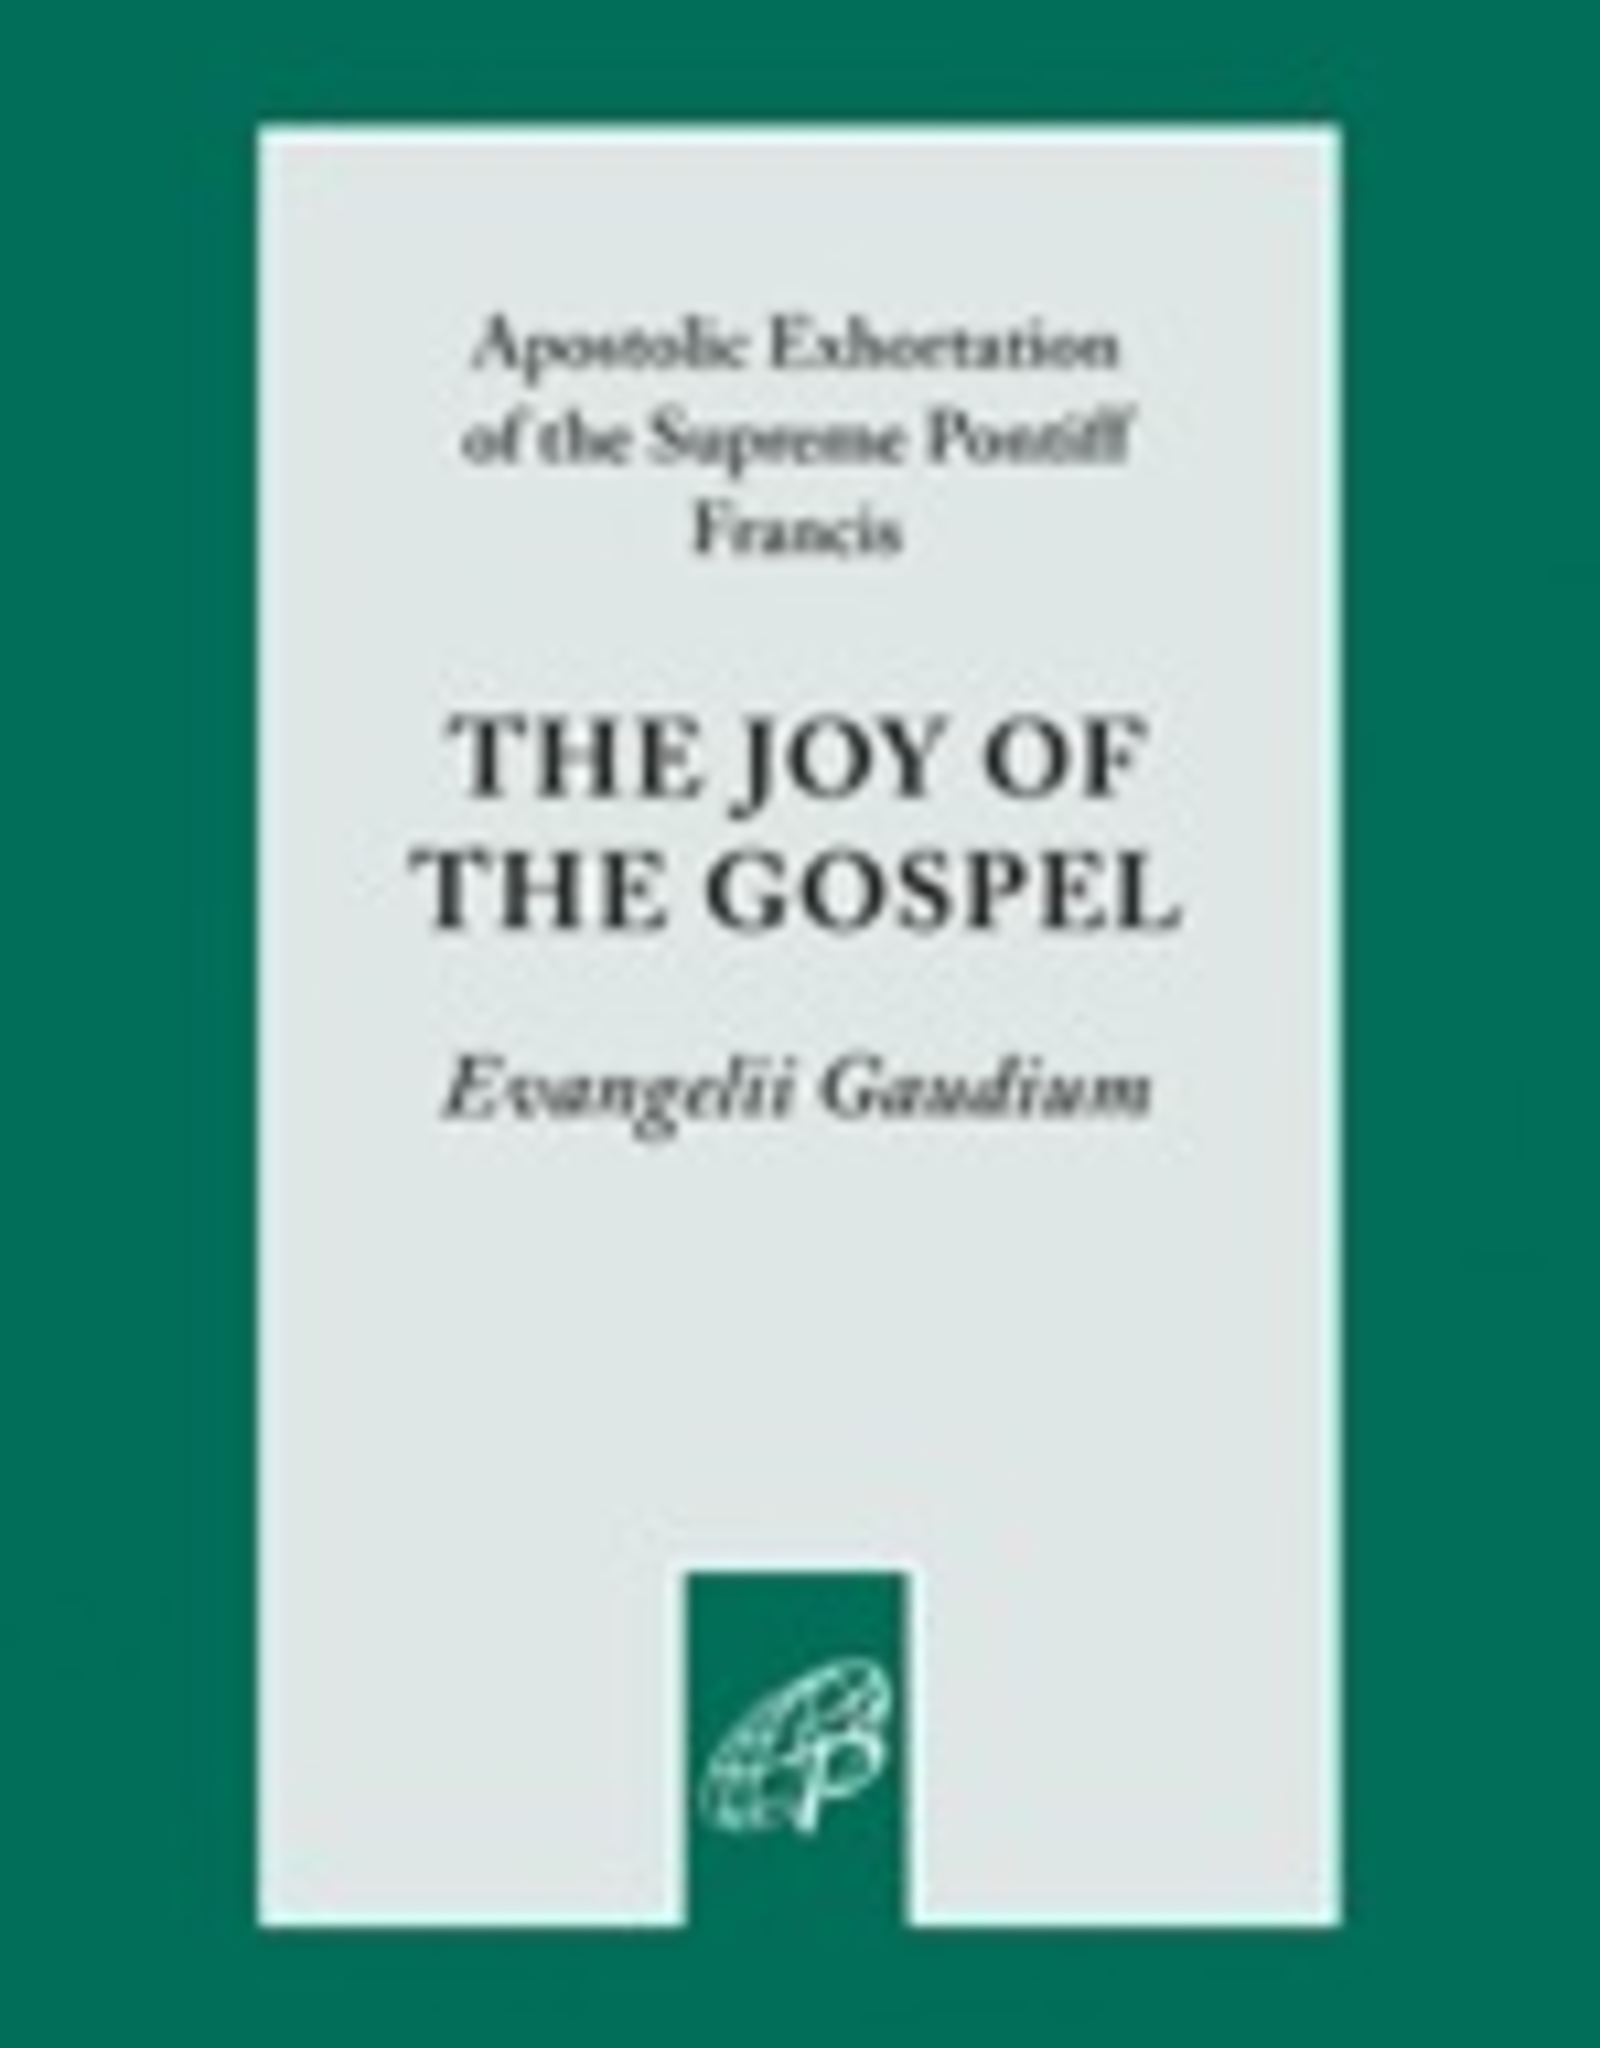 Pauline The Joy of the Gospel (Evangelii Gaudium), Pope Francis (paperback)